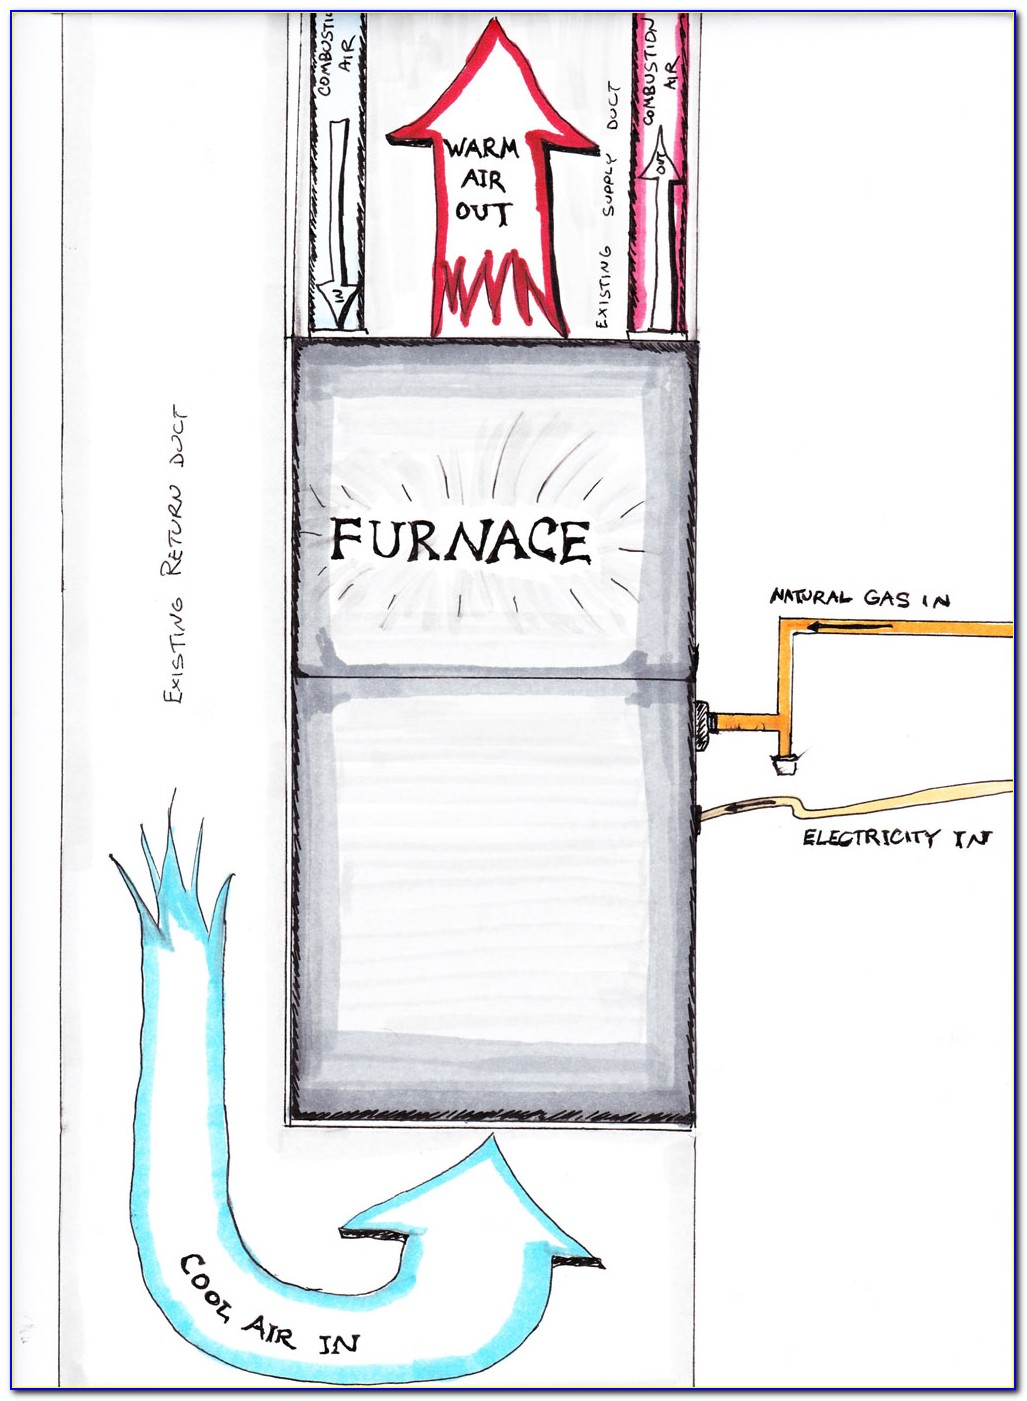 High Efficiency Gas Furnace Venting Diagram